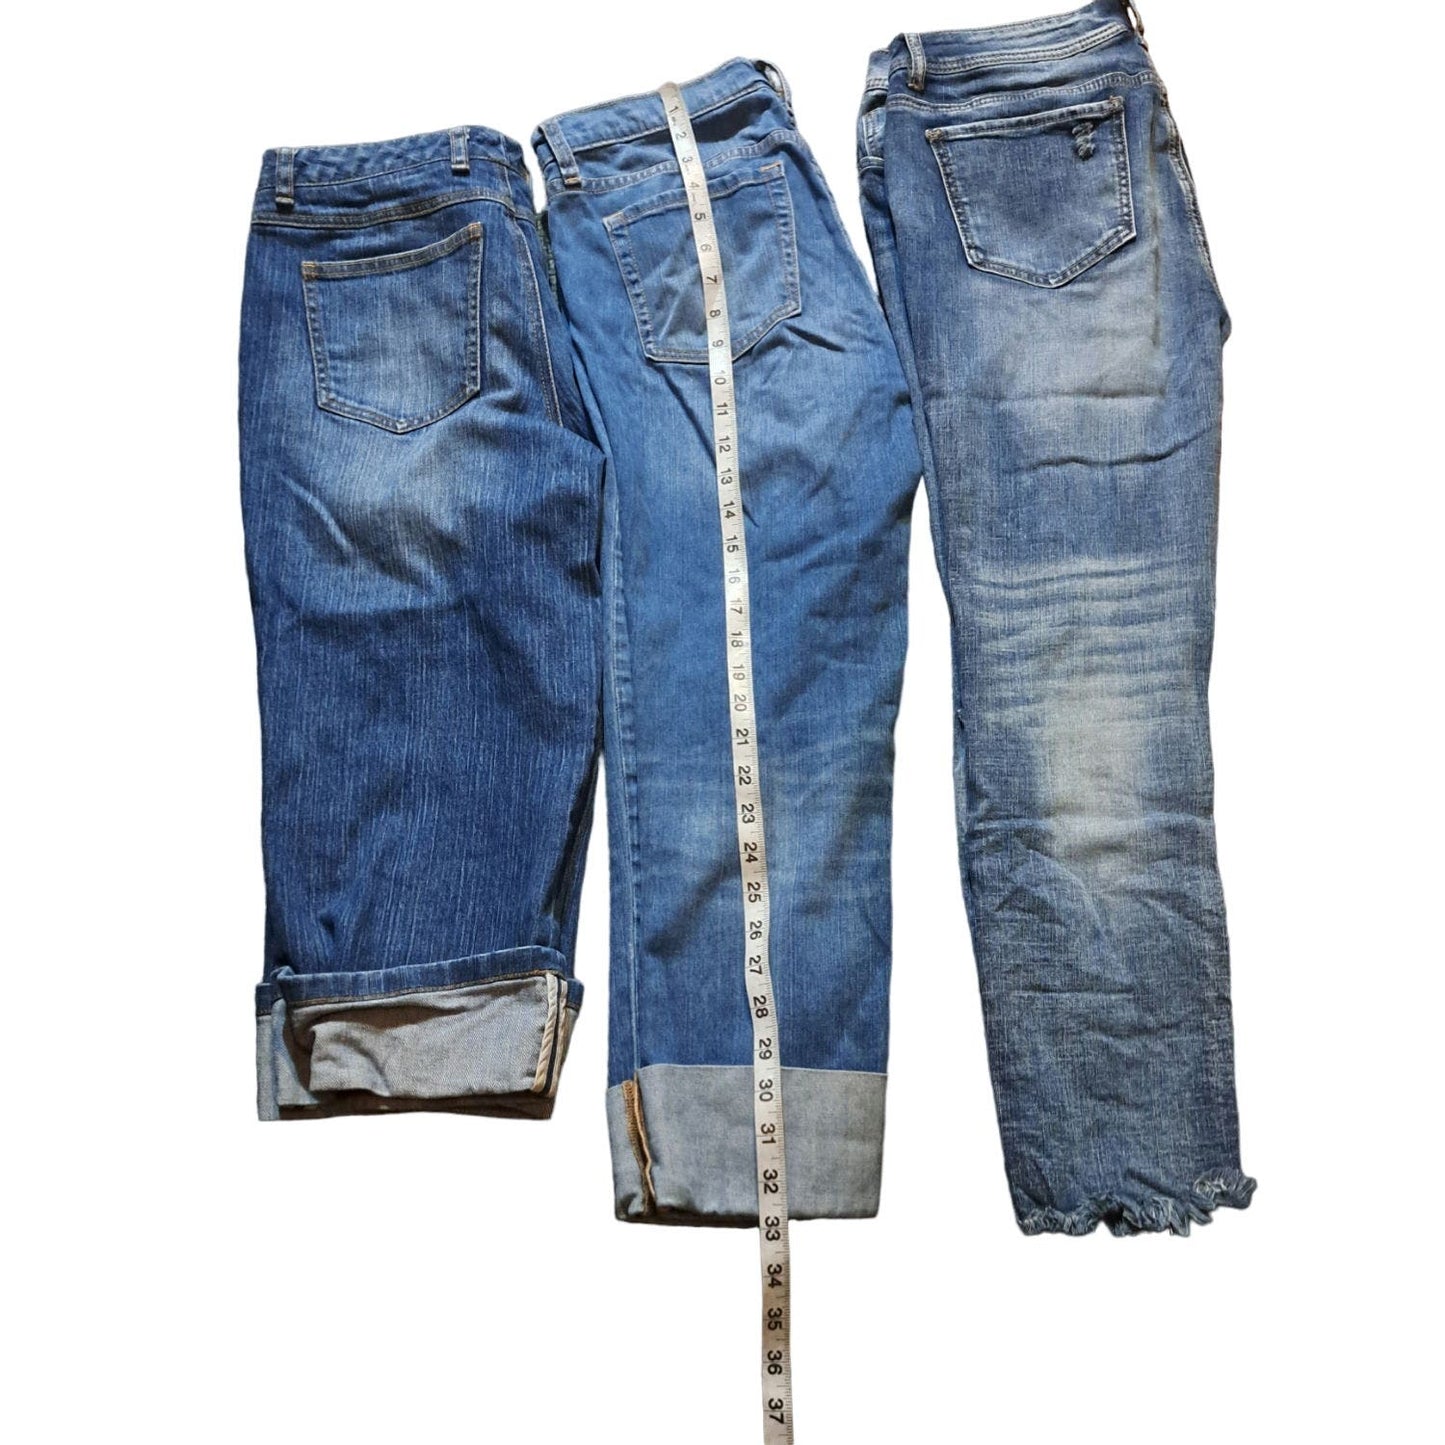 Fabulous Fun Bundle of 6 Size 6 Jeans! Talbots-Lucky Brand-Hot Kiss-Gap